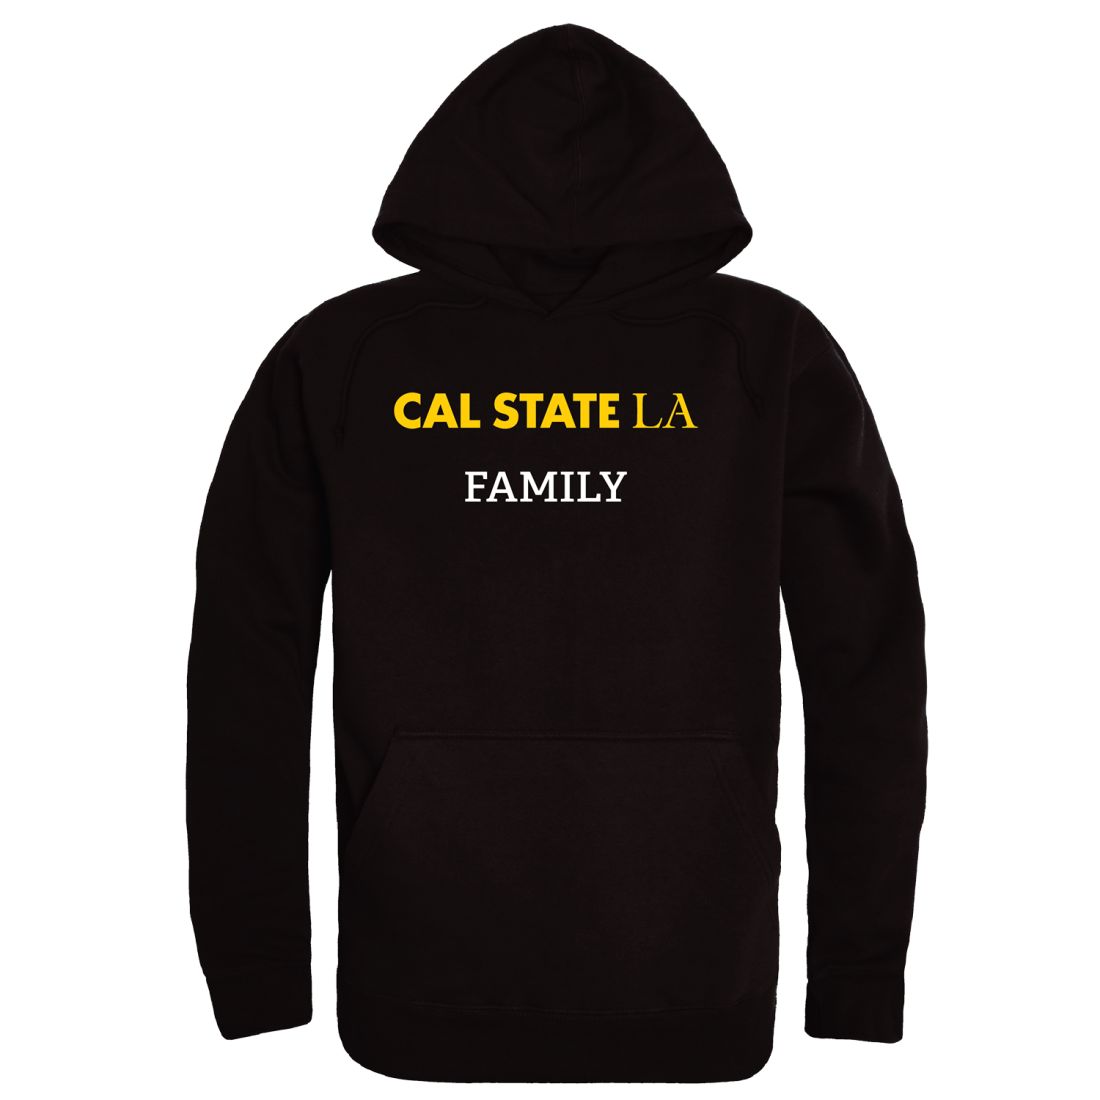 California State University Los Angeles Golden Eagles Family Hoodie Sweatshirts